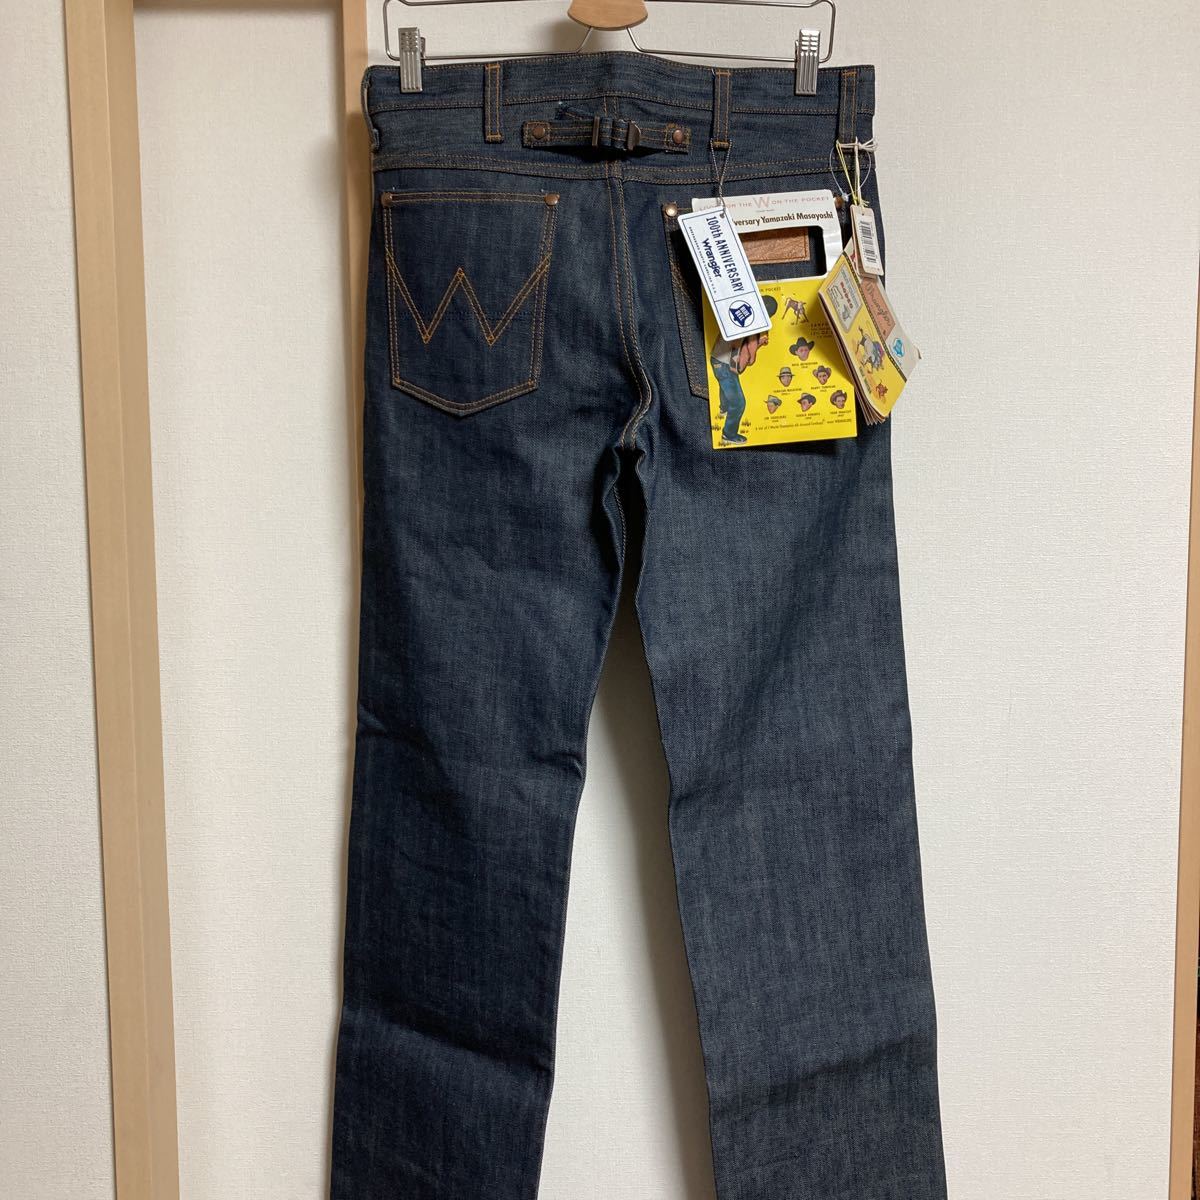 [Неиспользованный] Wrangler × Yamazaki Masayoshi Wrangler 100-летний юбилей × Masayoshi Yamazaki 10th Anniversary Collaboration Jeans W29 S1022-89 с меткой